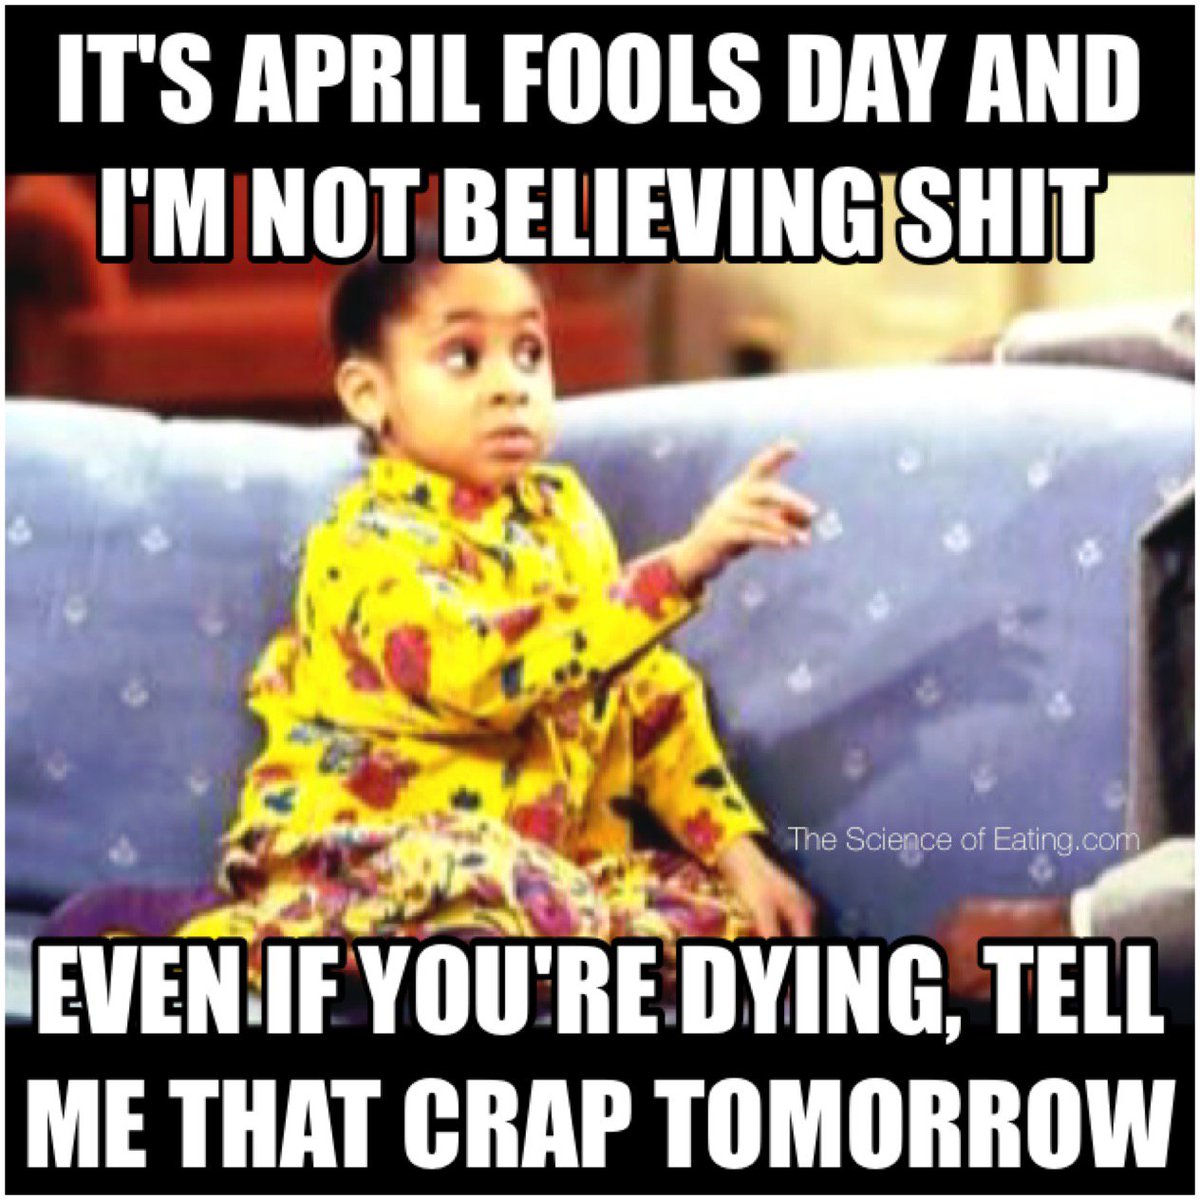 Mandatory Monday Memes April Fools Day Edition #8